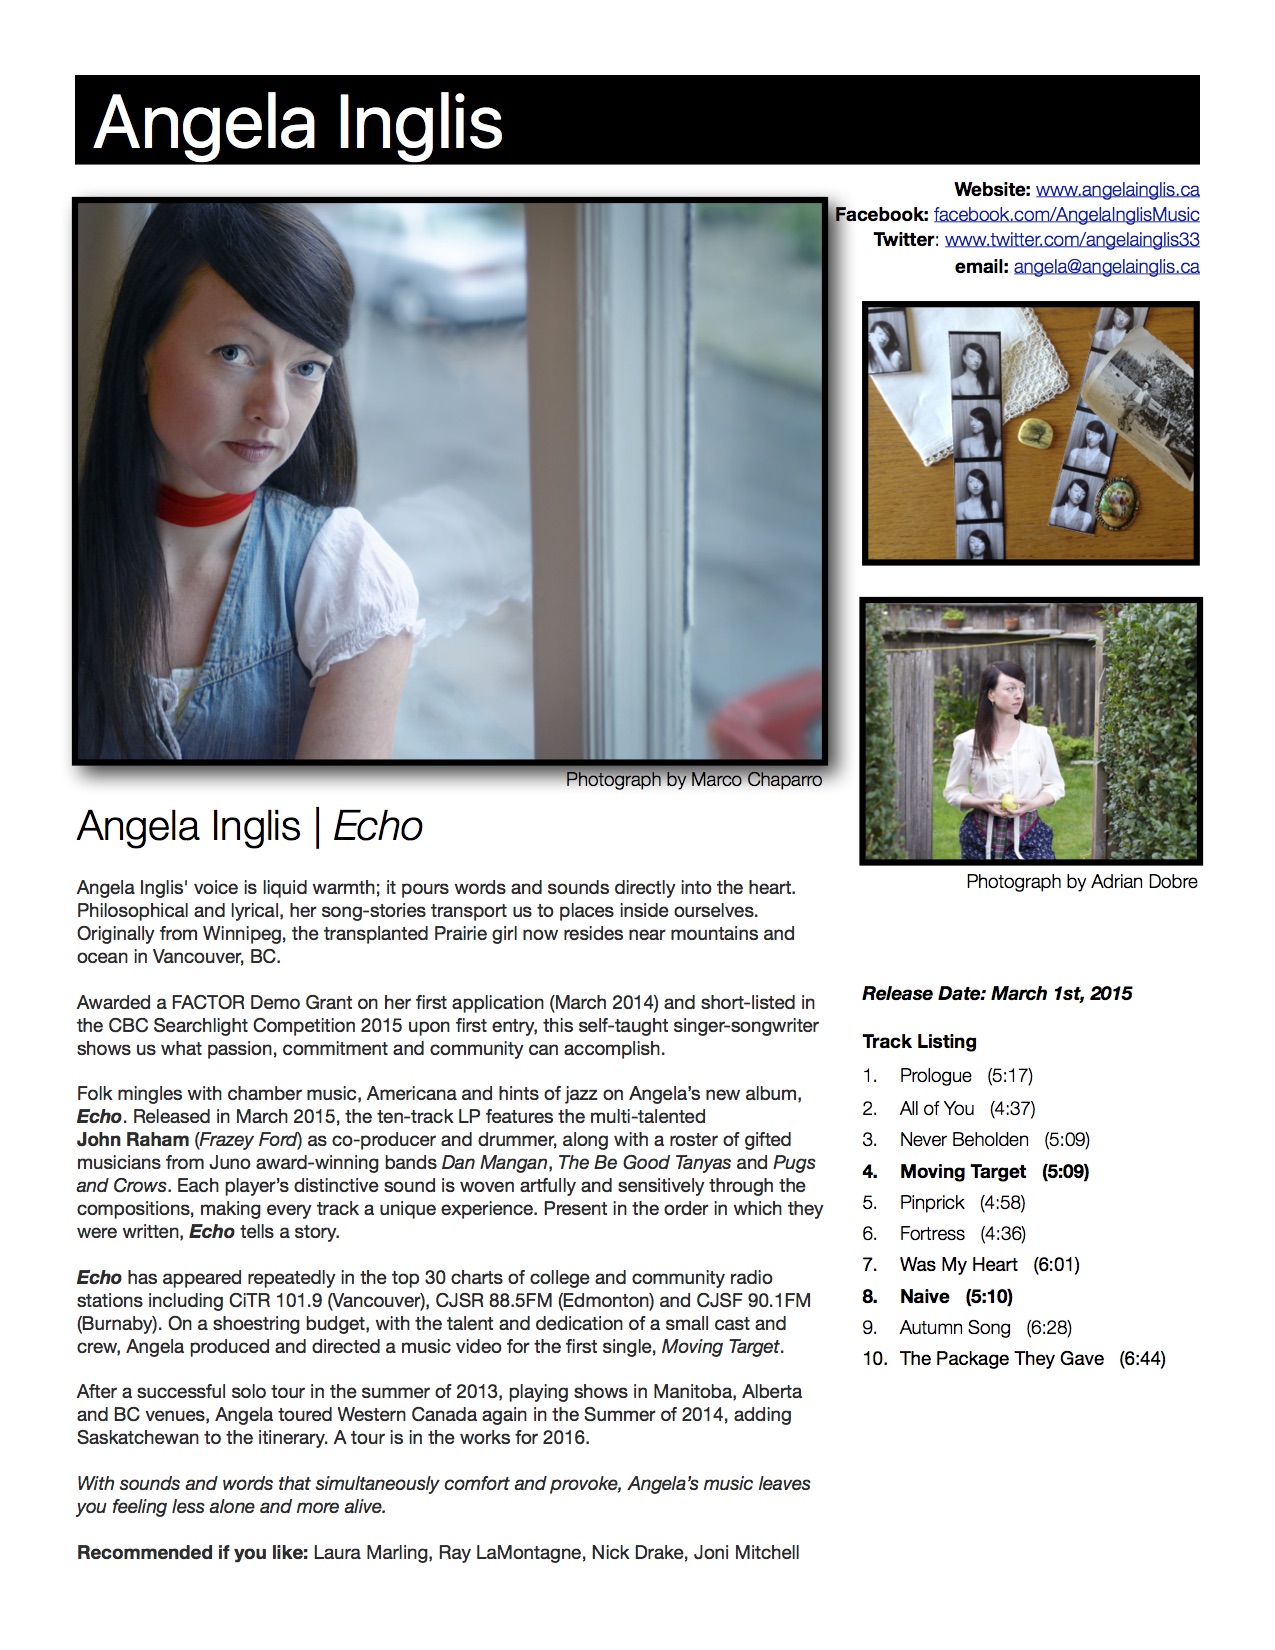 Angela Inglis Artist One-sheet - January 2016